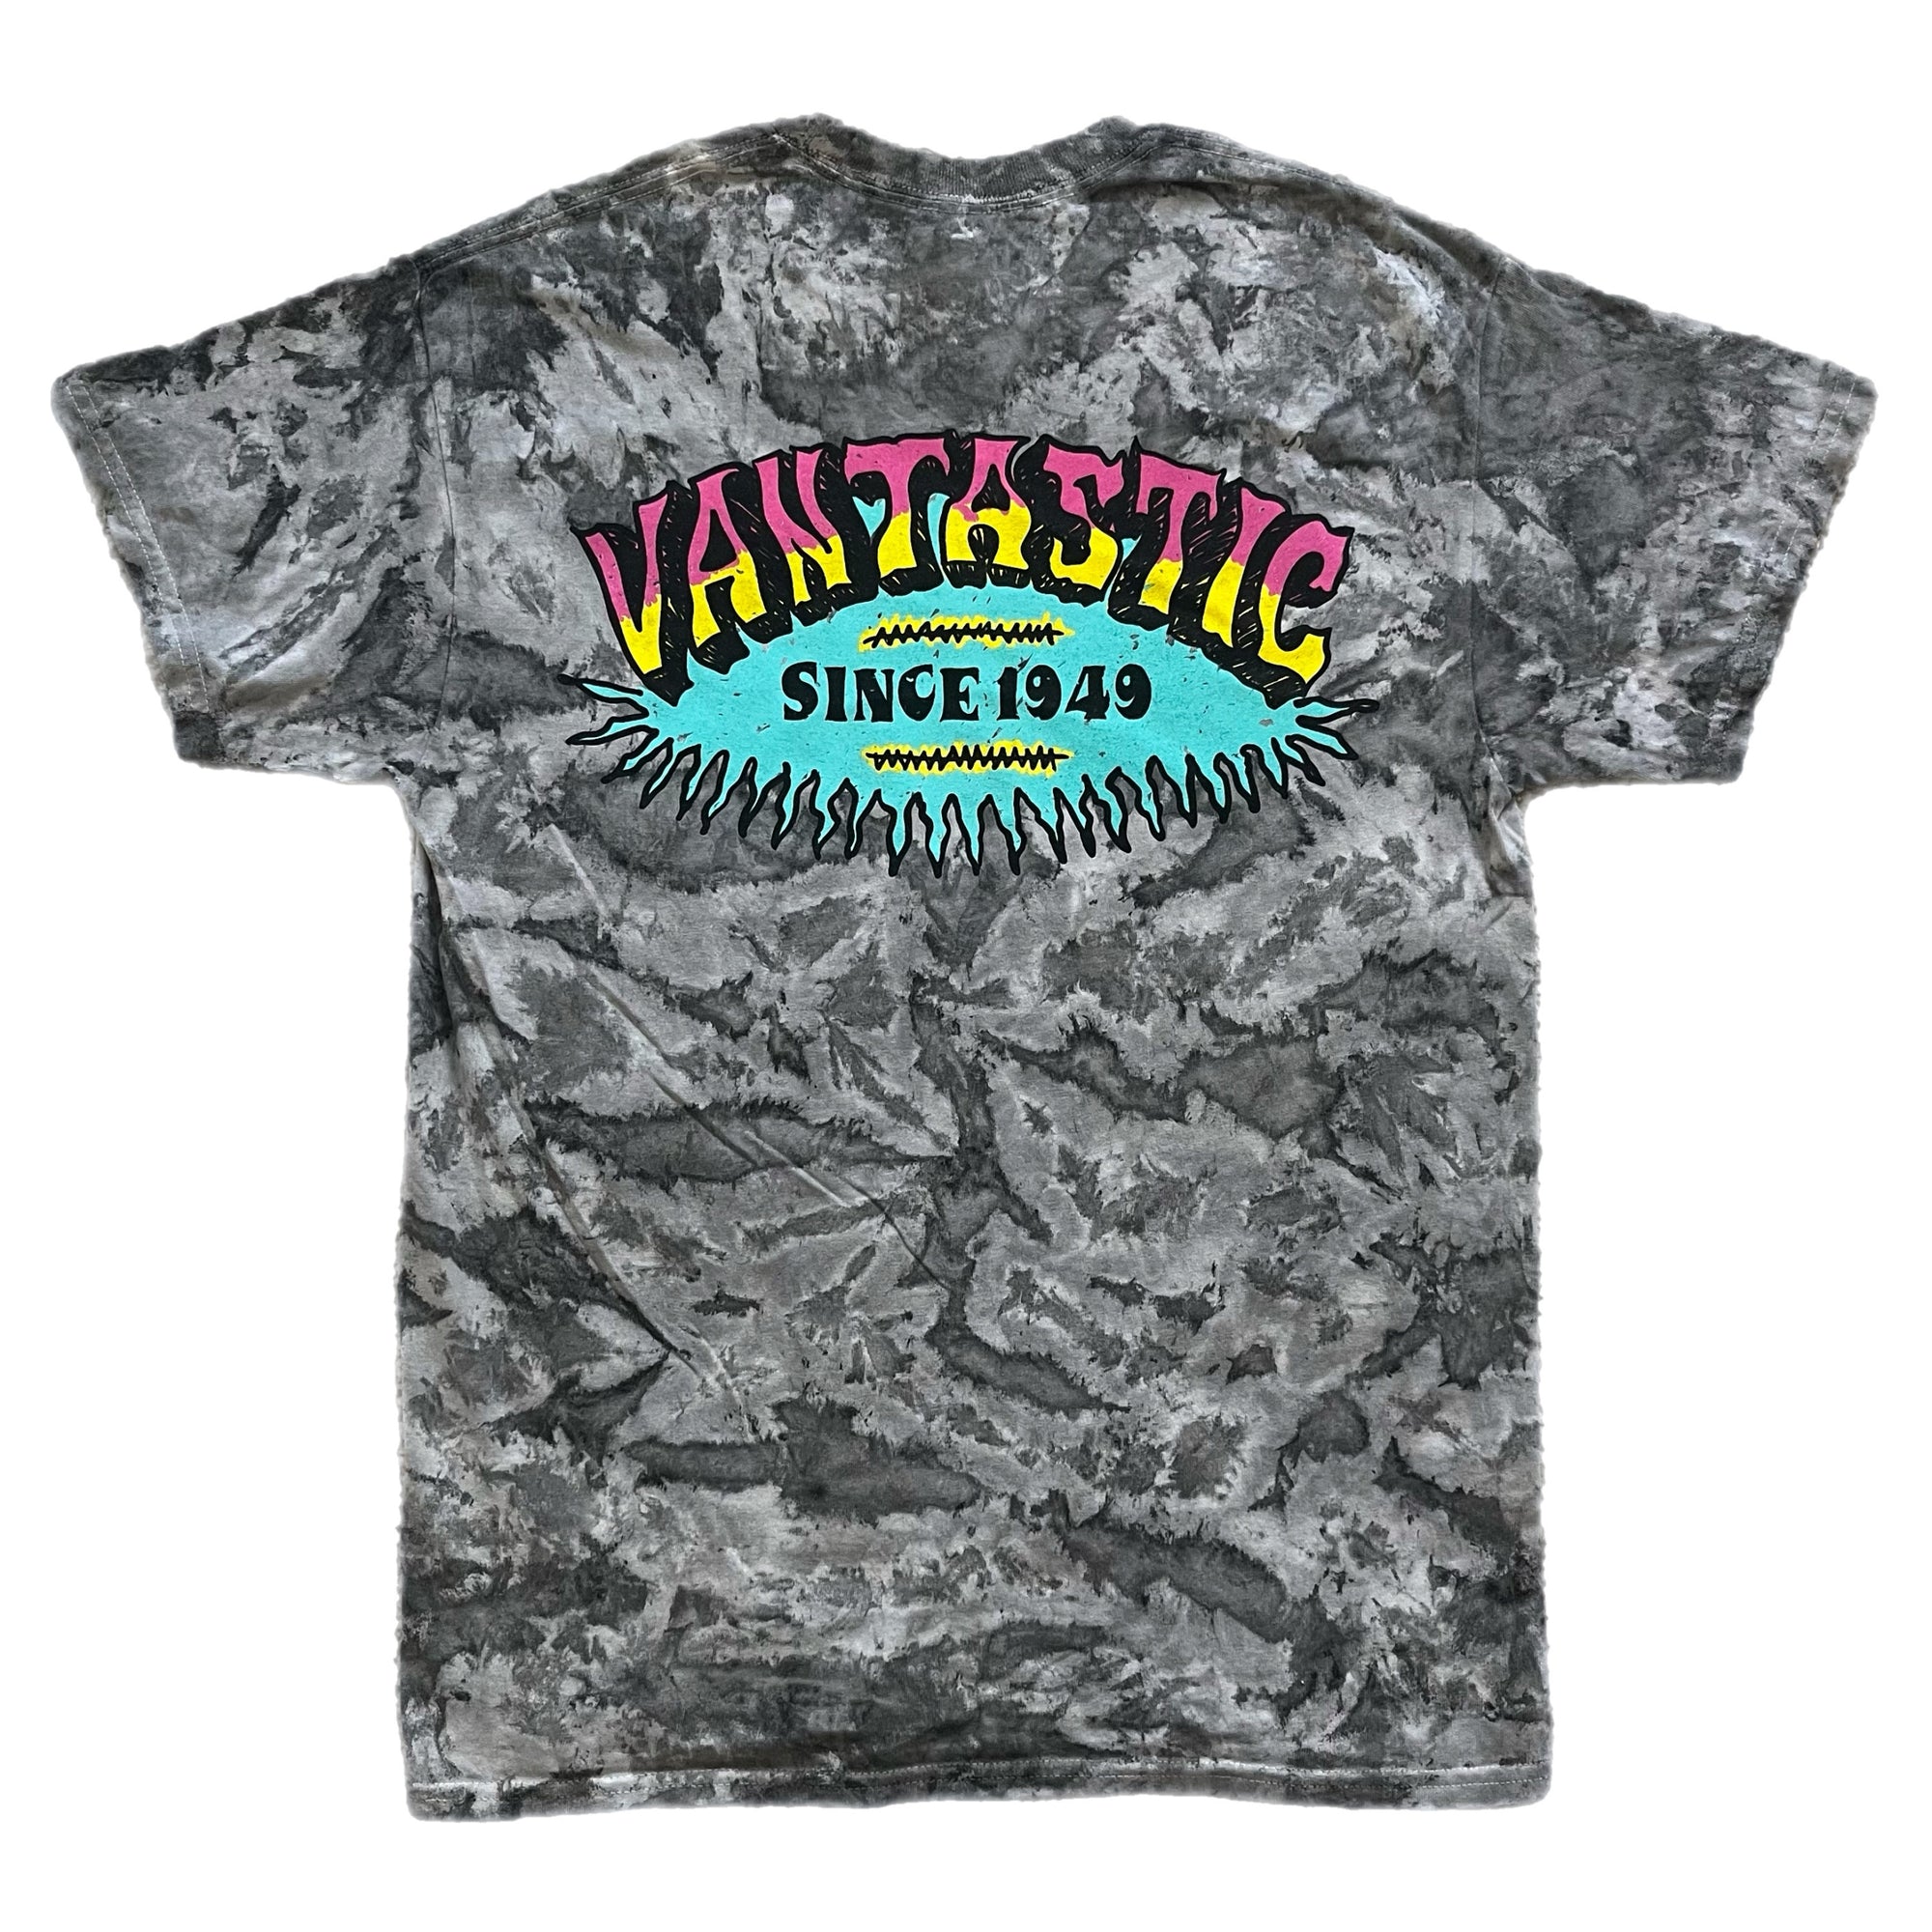 Tie-dye surf t-shirt - Charcoal Blaster Wash